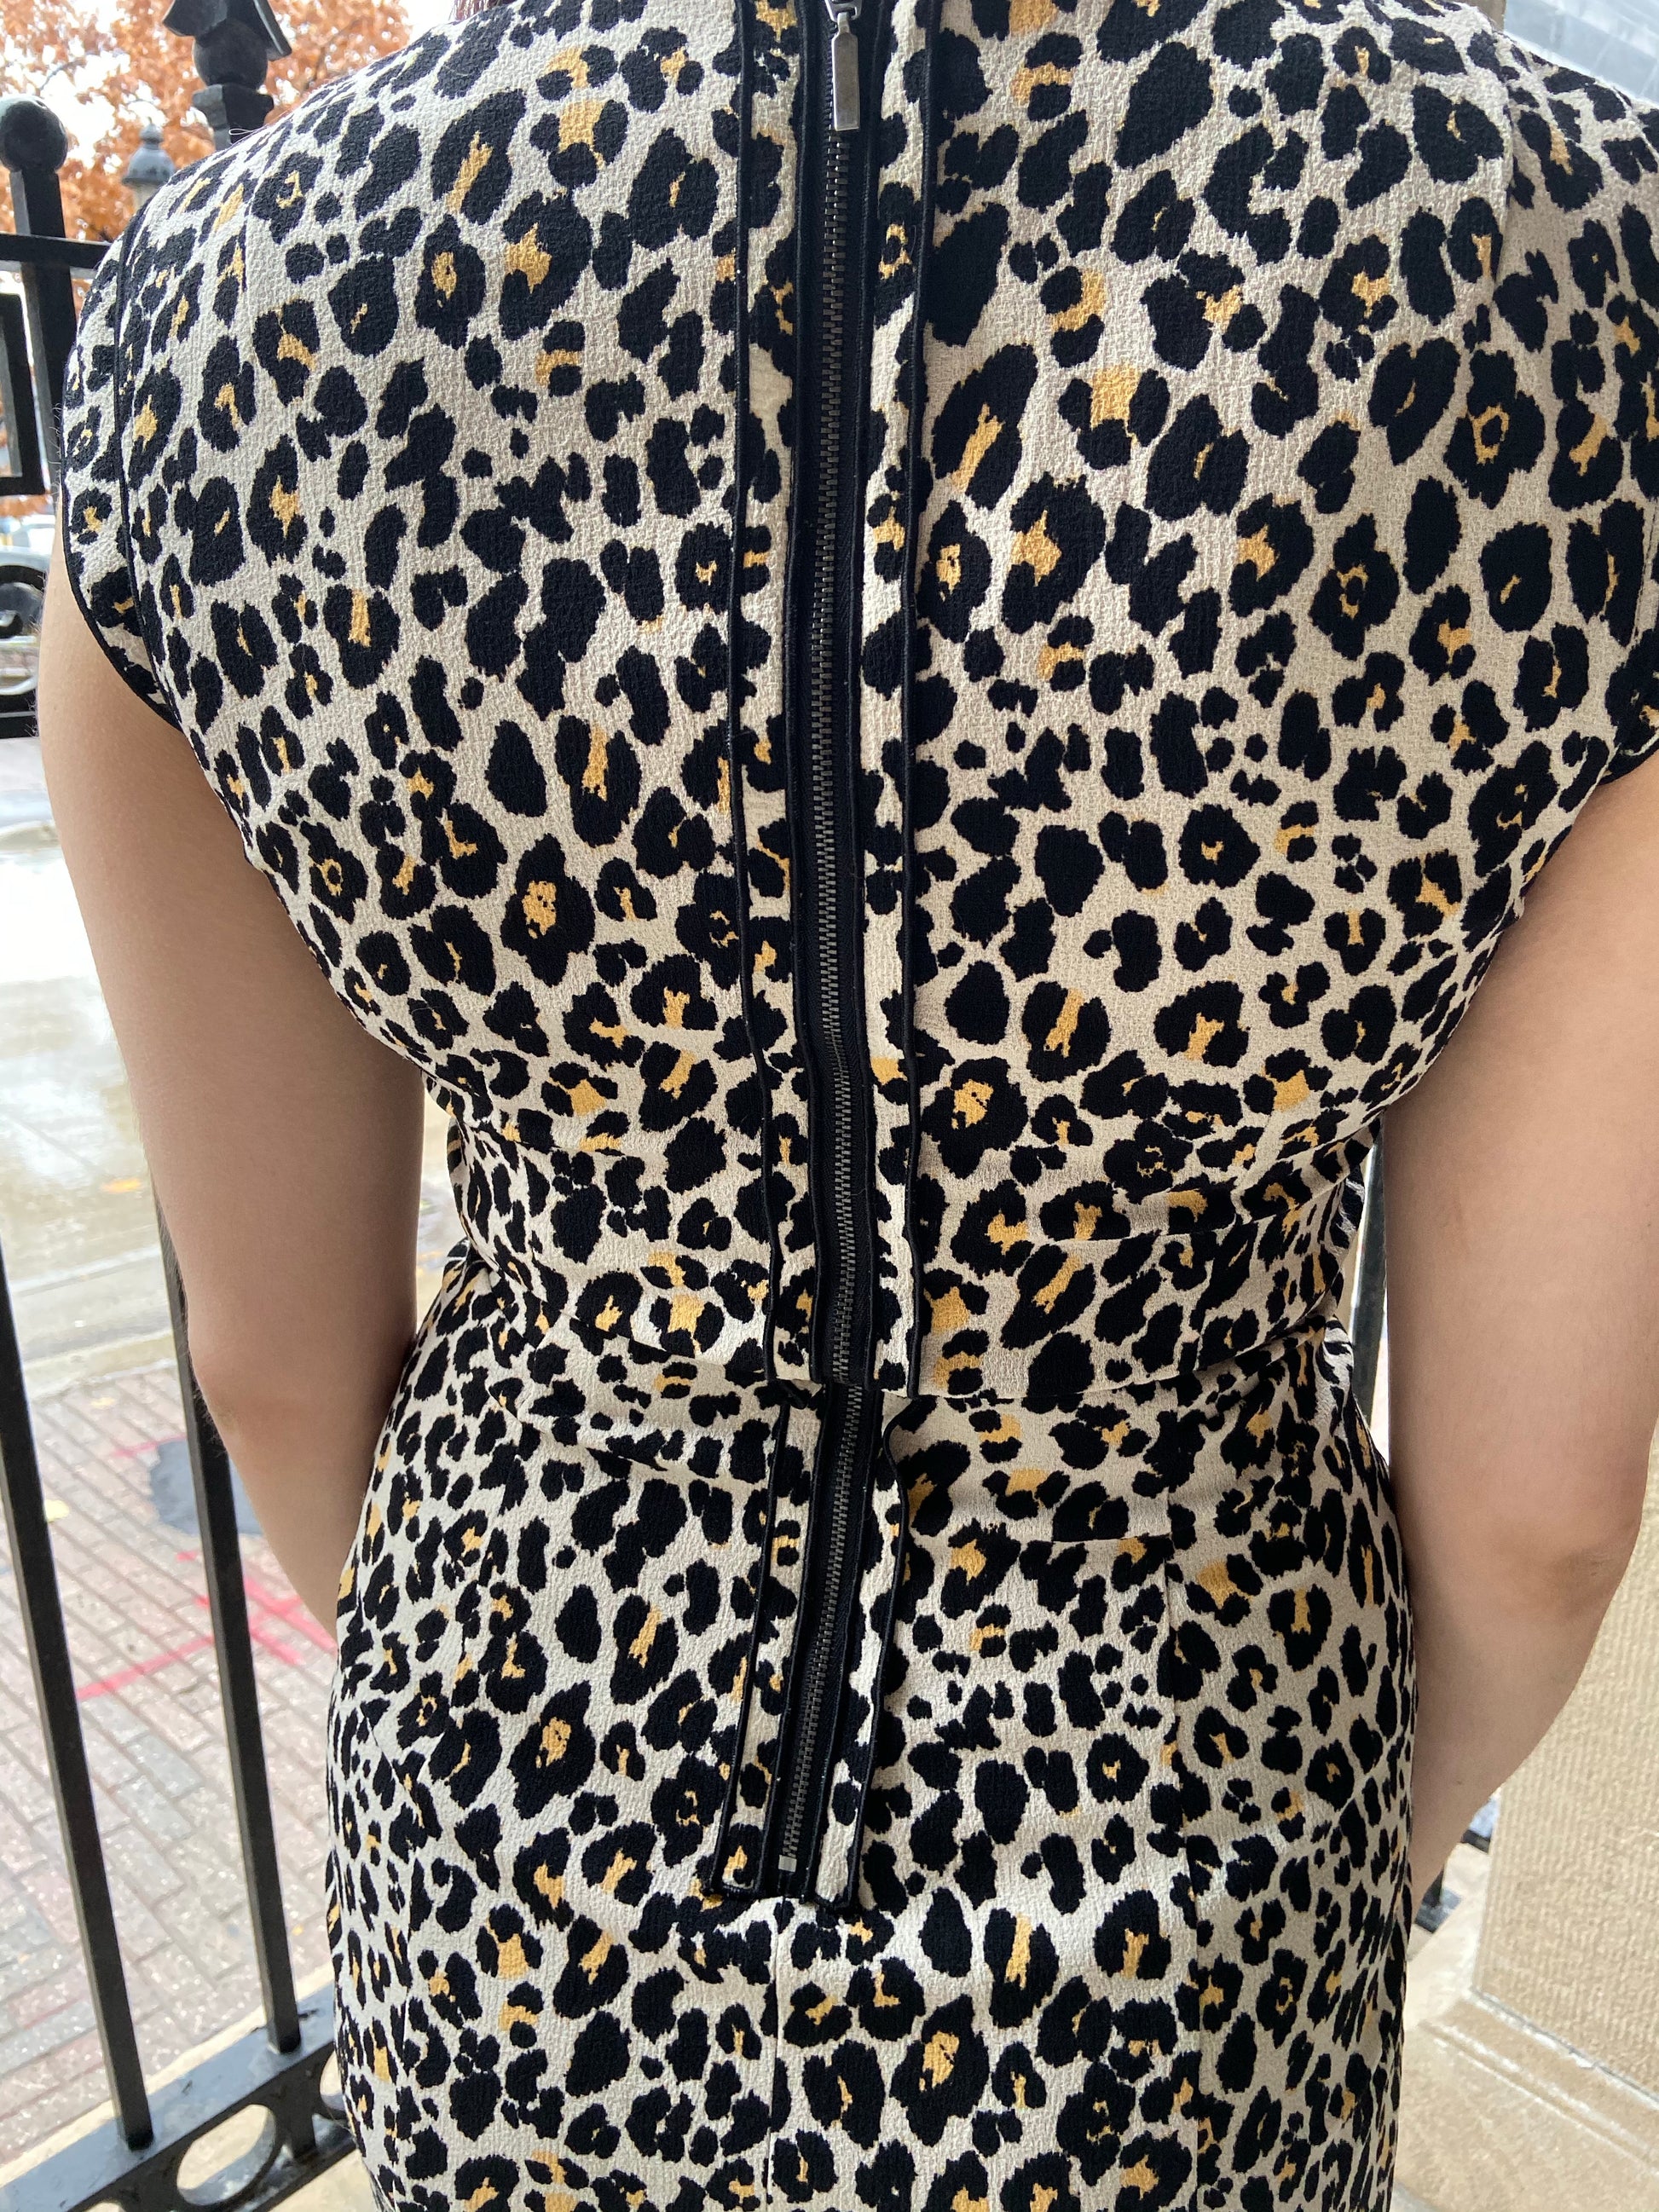 Leopard Print Dress - Le Prix Fashion & Consulting